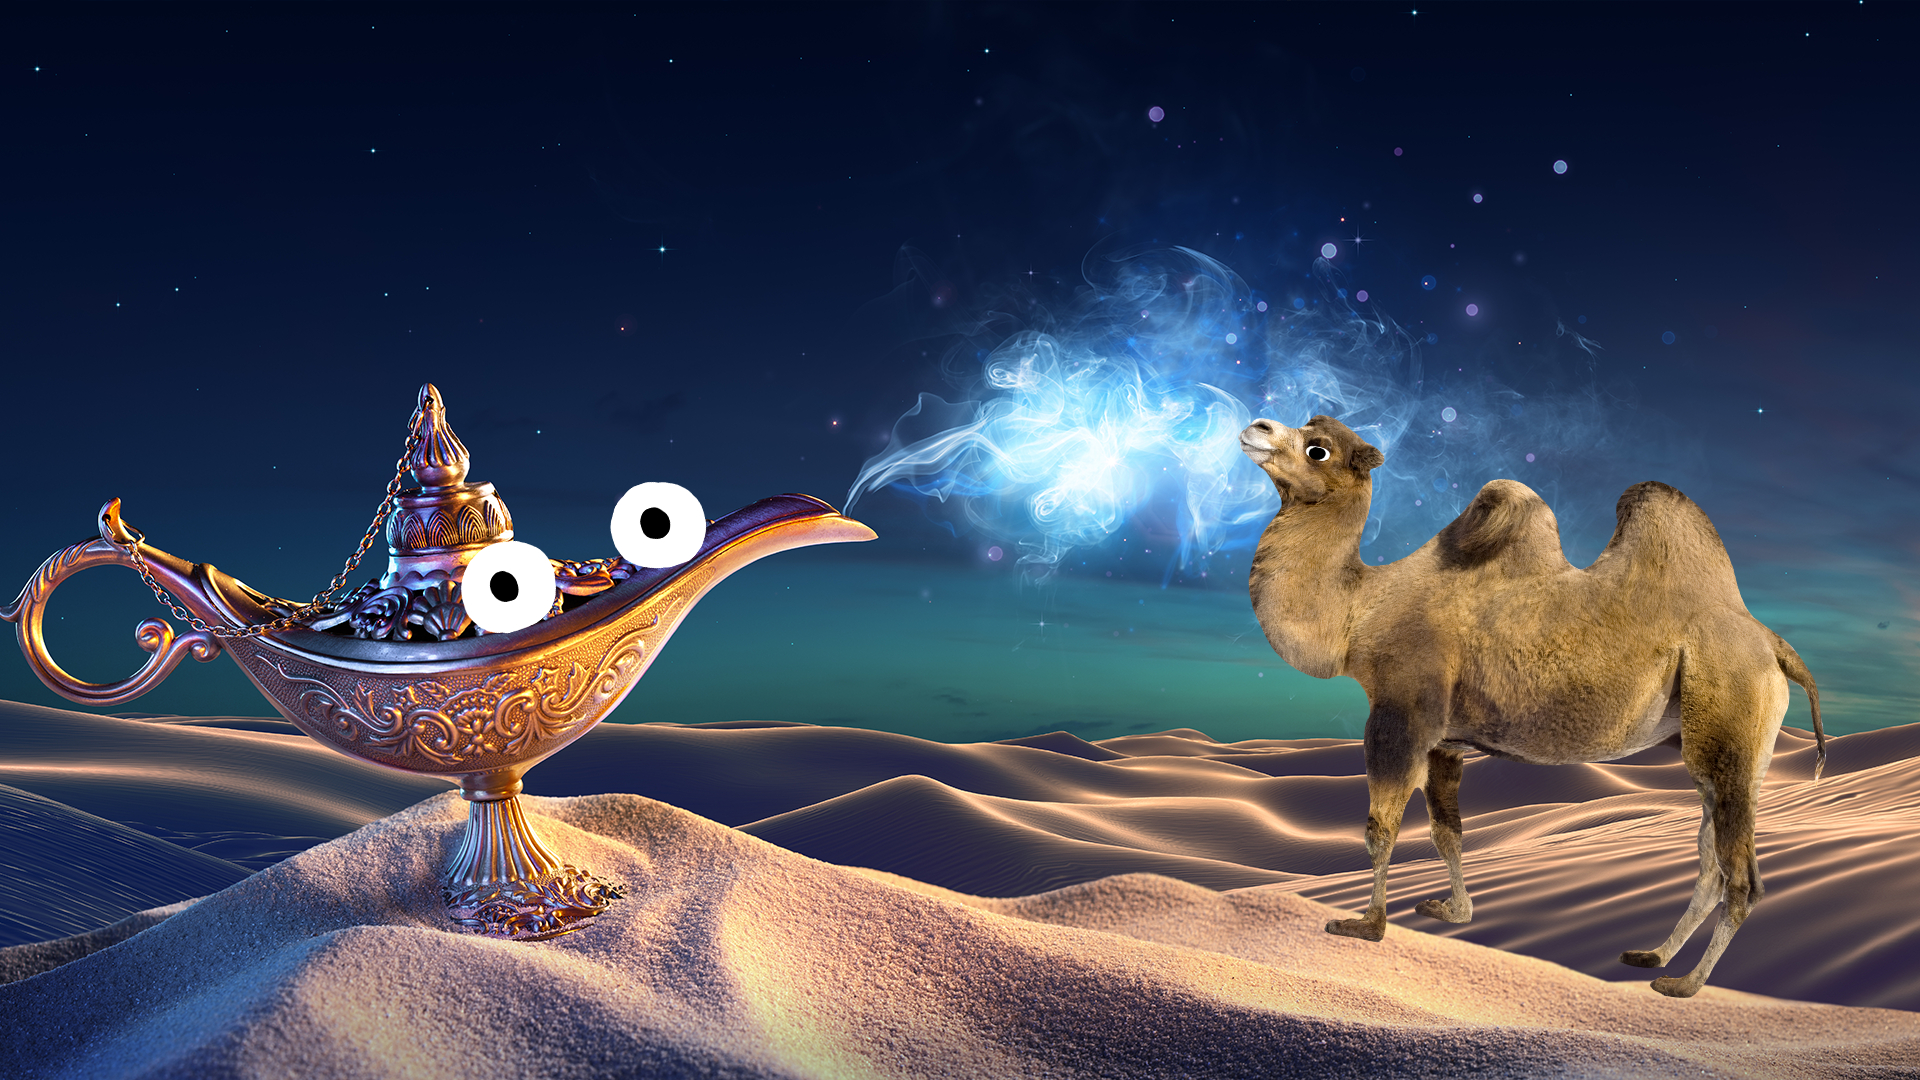 A magic lamp and a camel